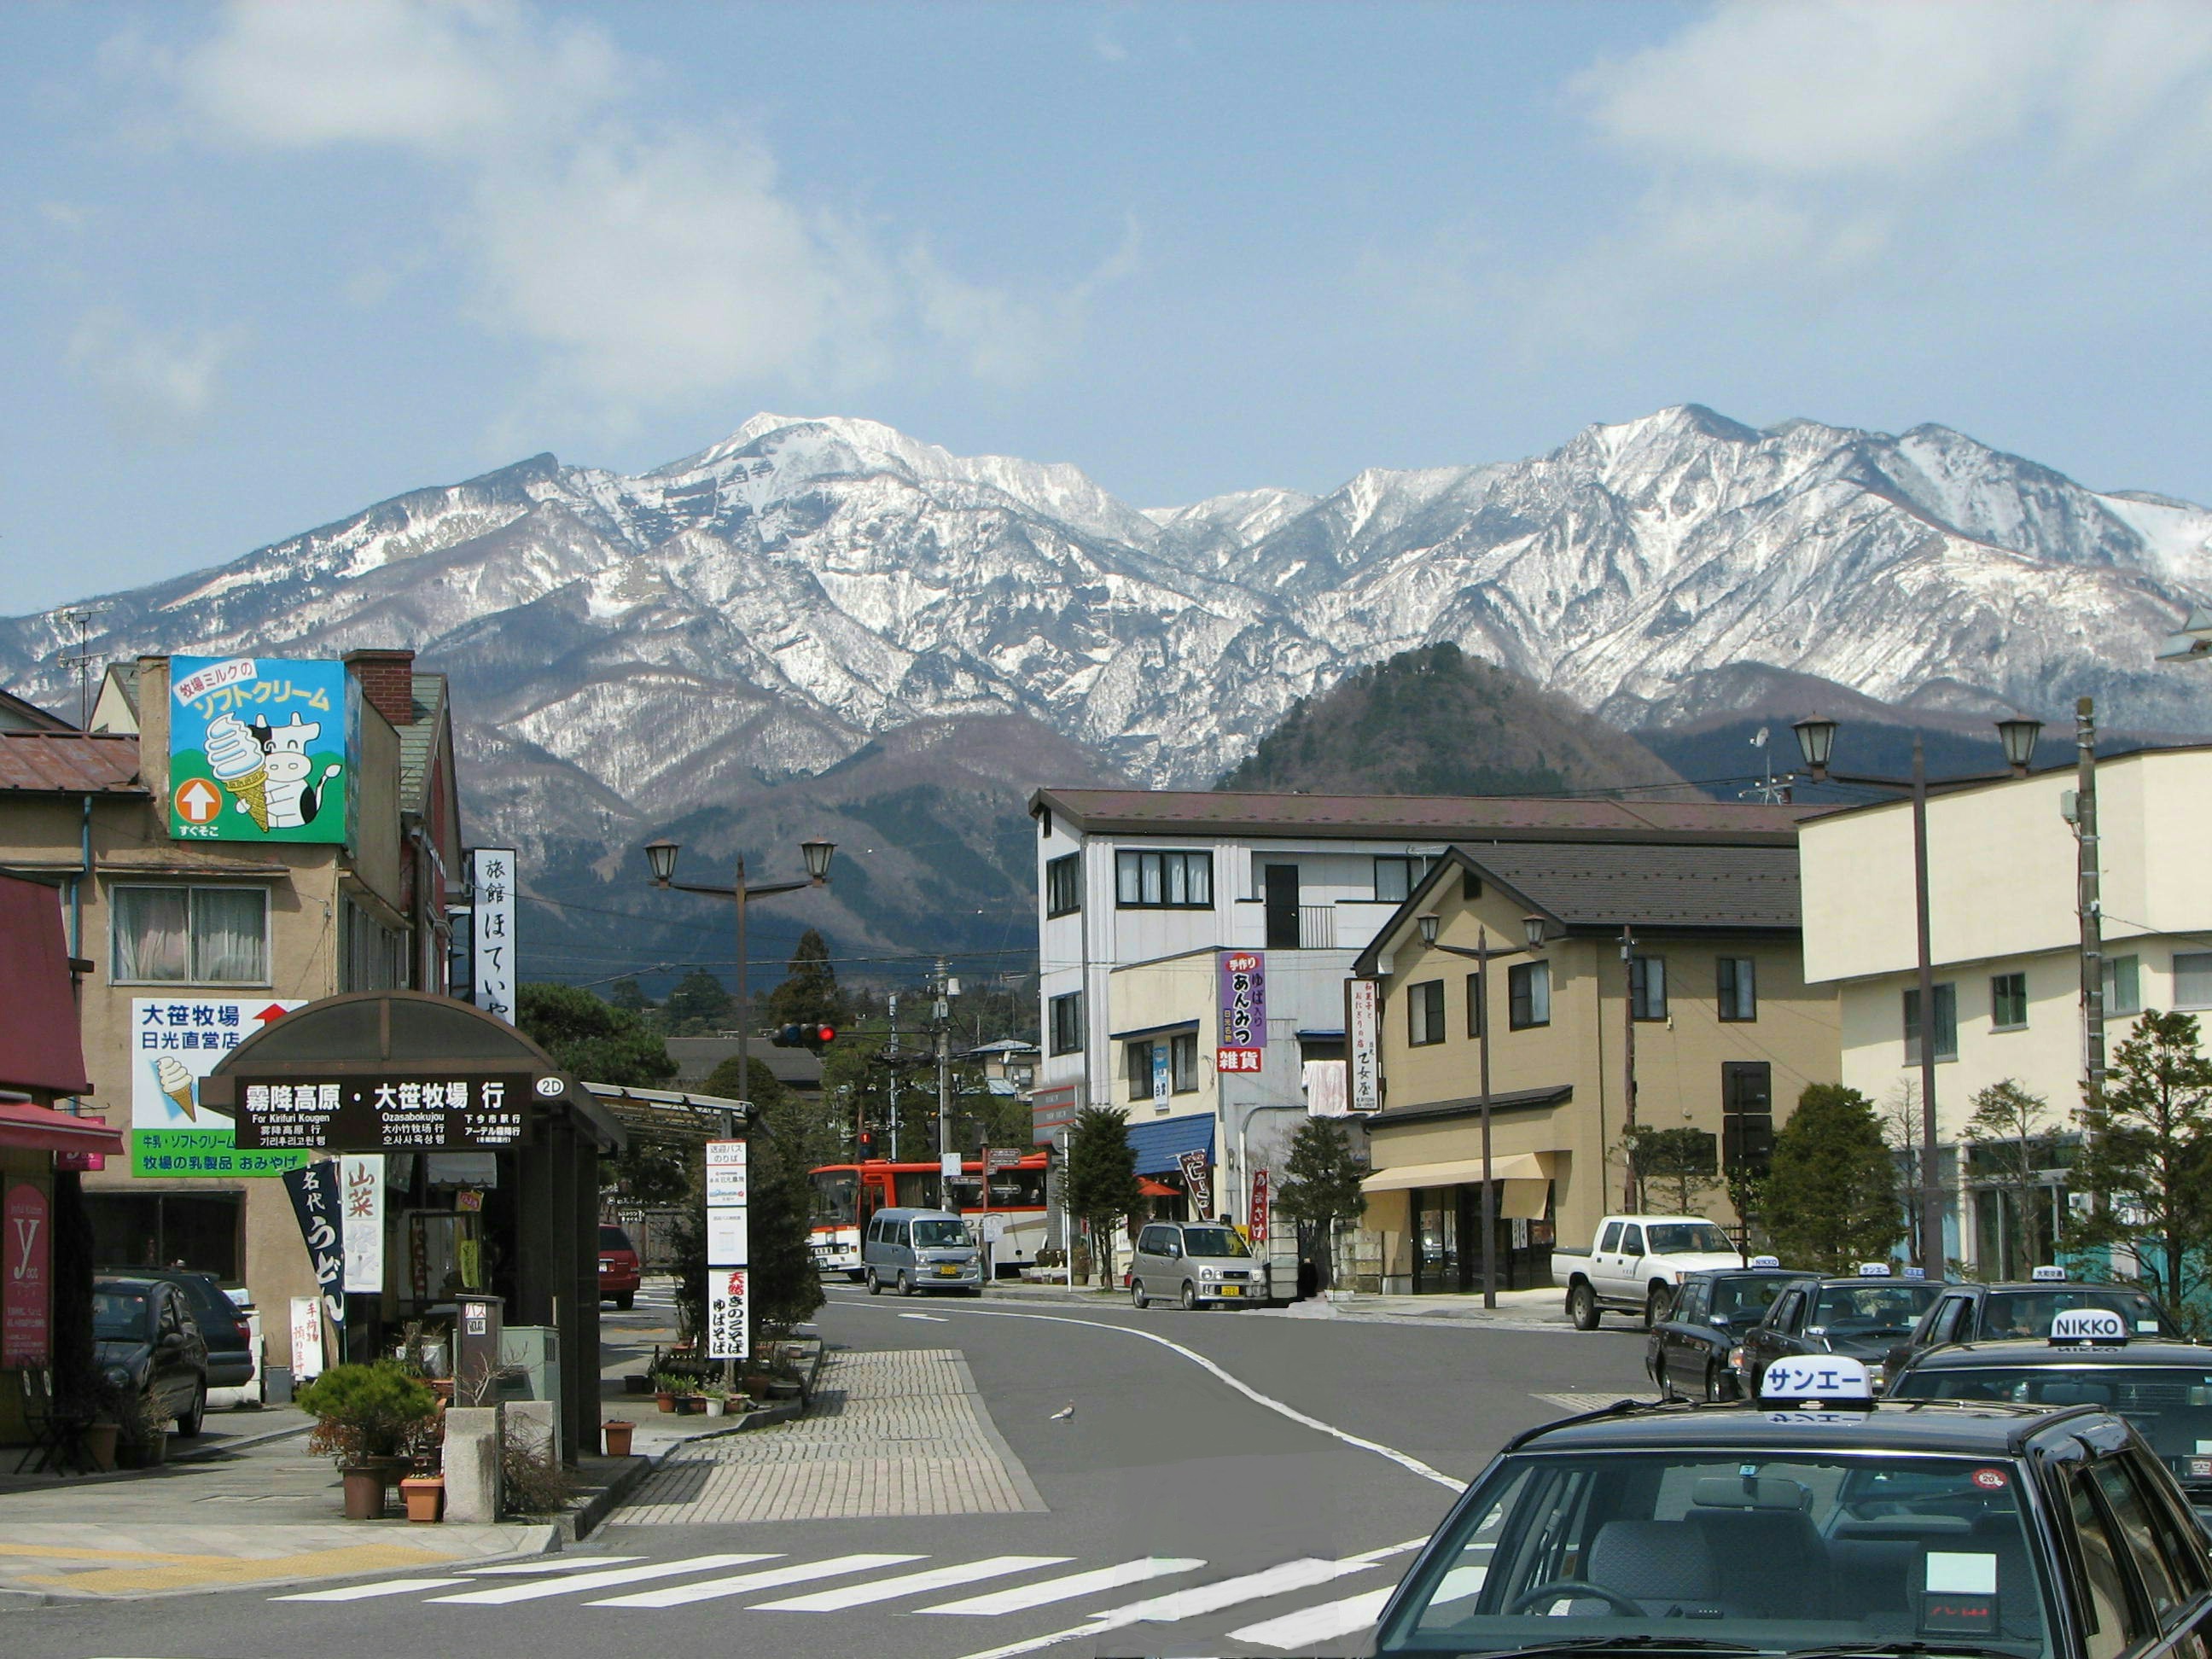 Nikko, Tochigi prefecture, Japan